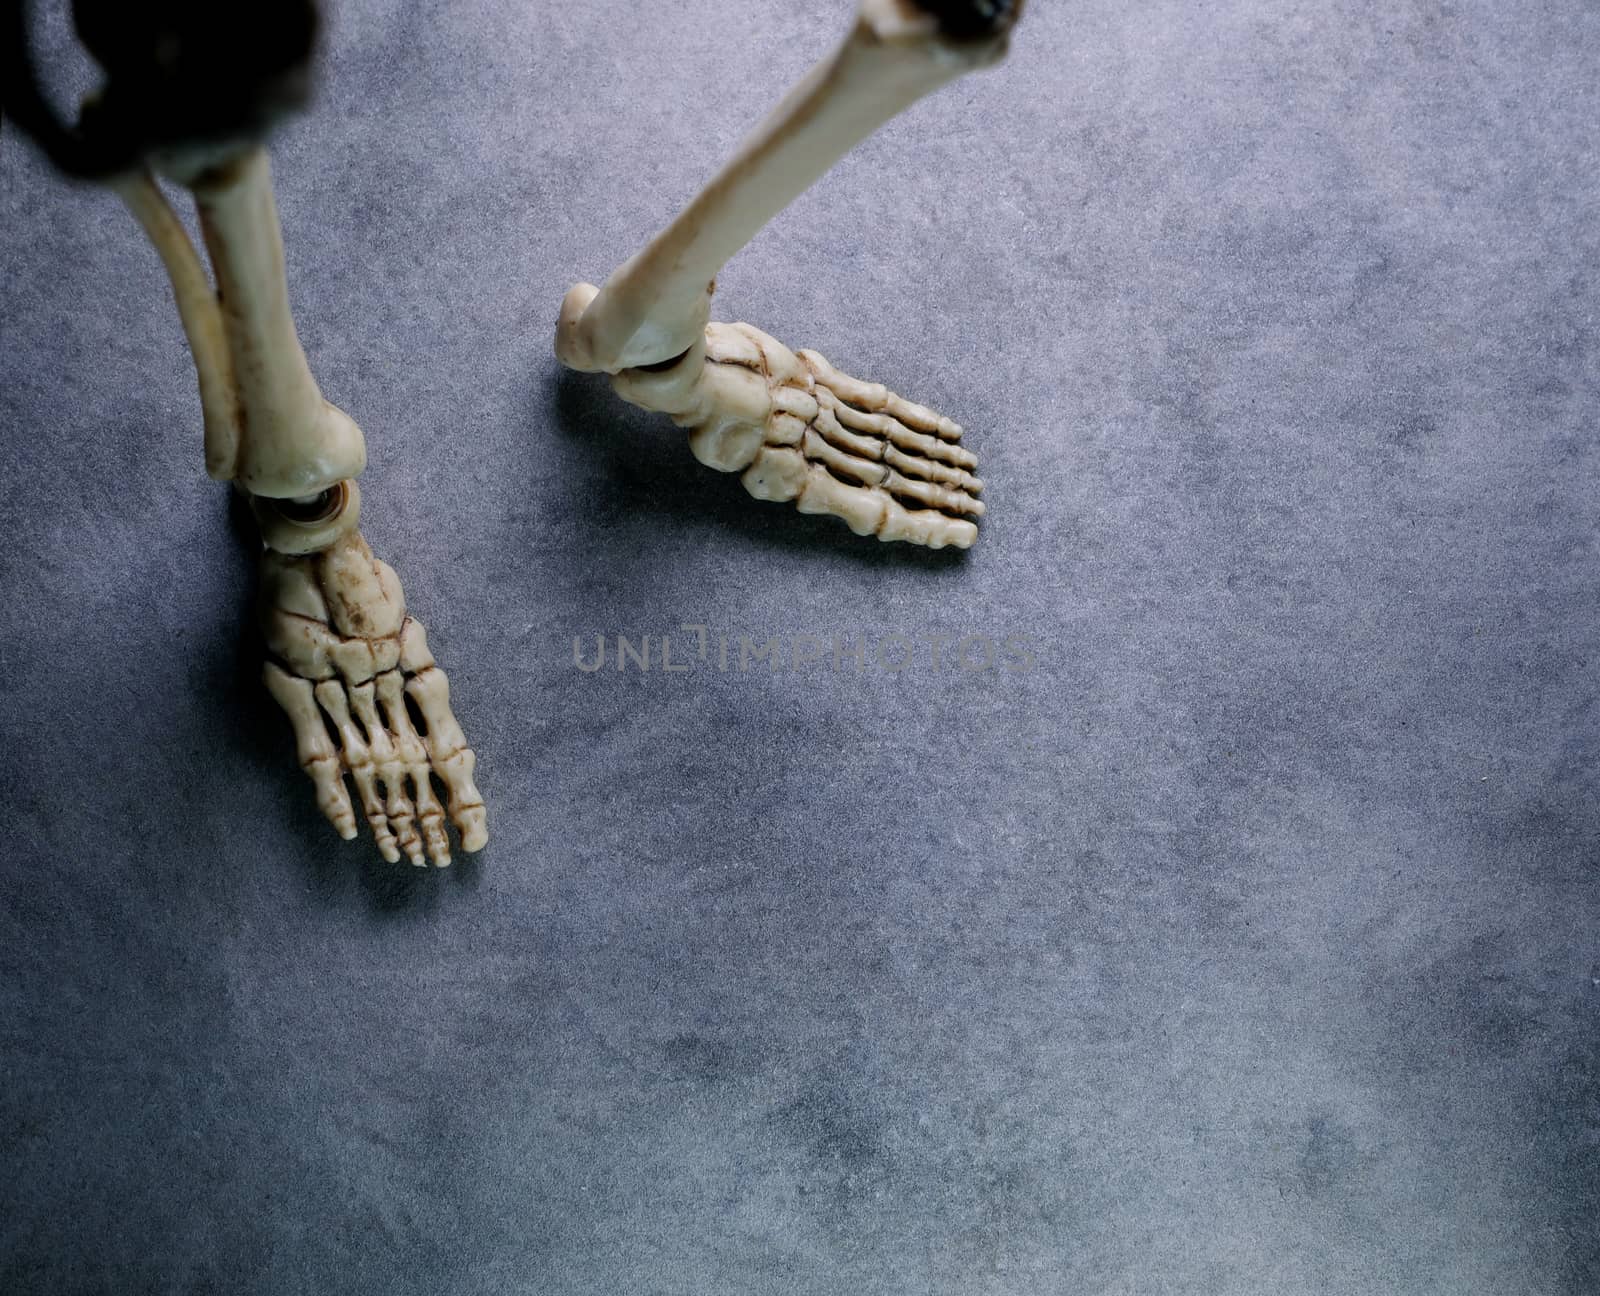 Miniature Human Skeleton Model Close Up